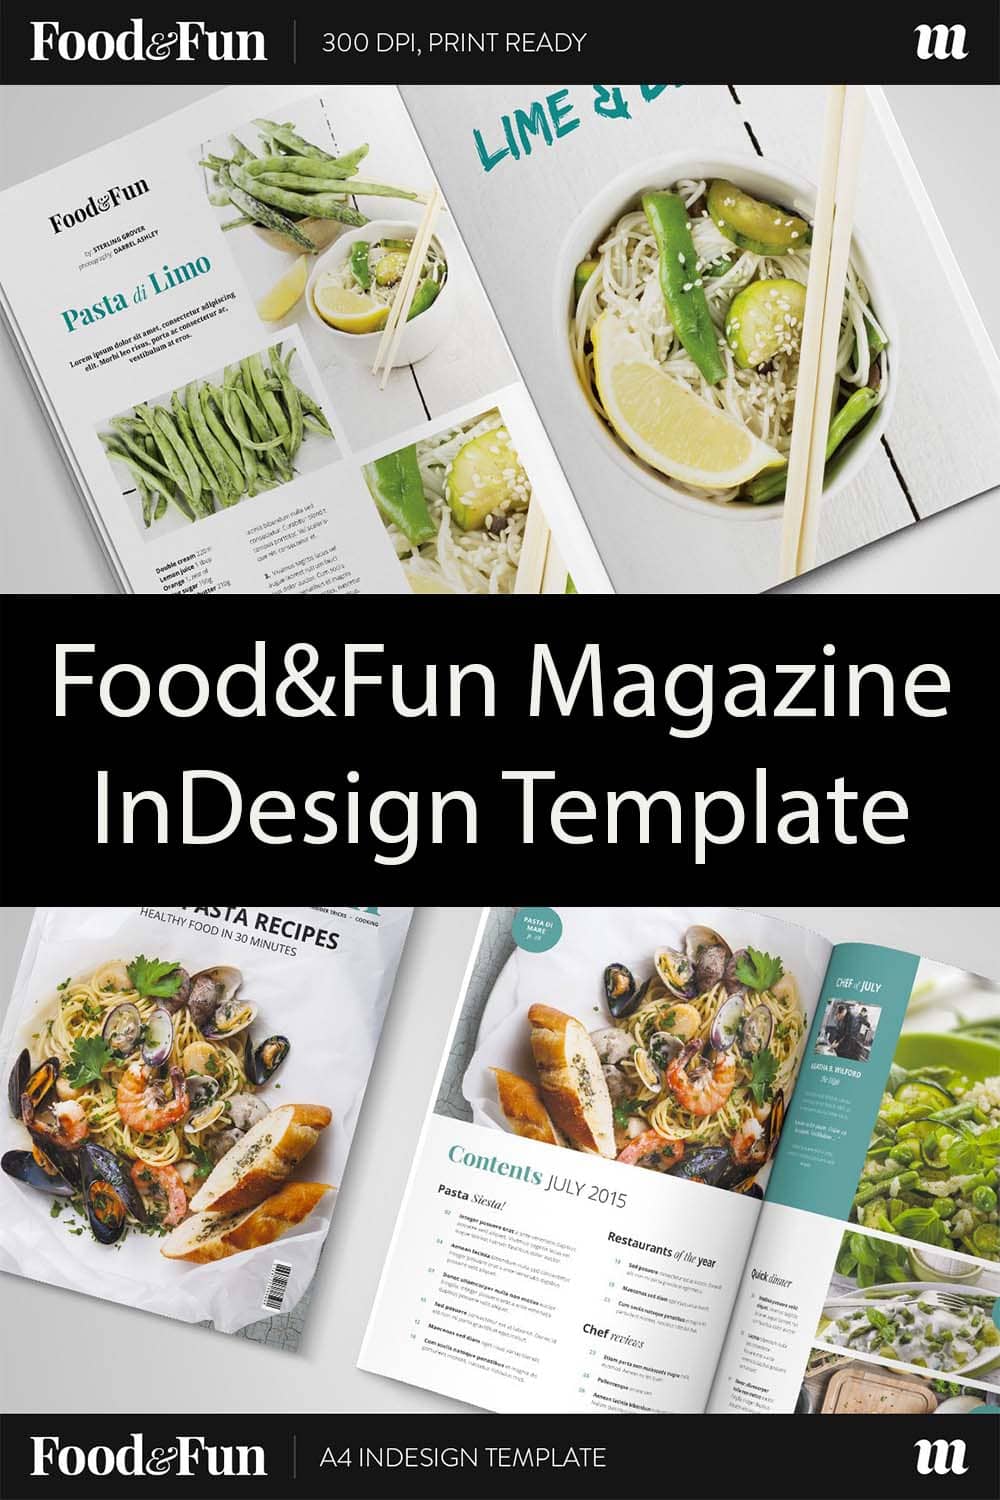 foodfun magazine indesign template pinterest image.